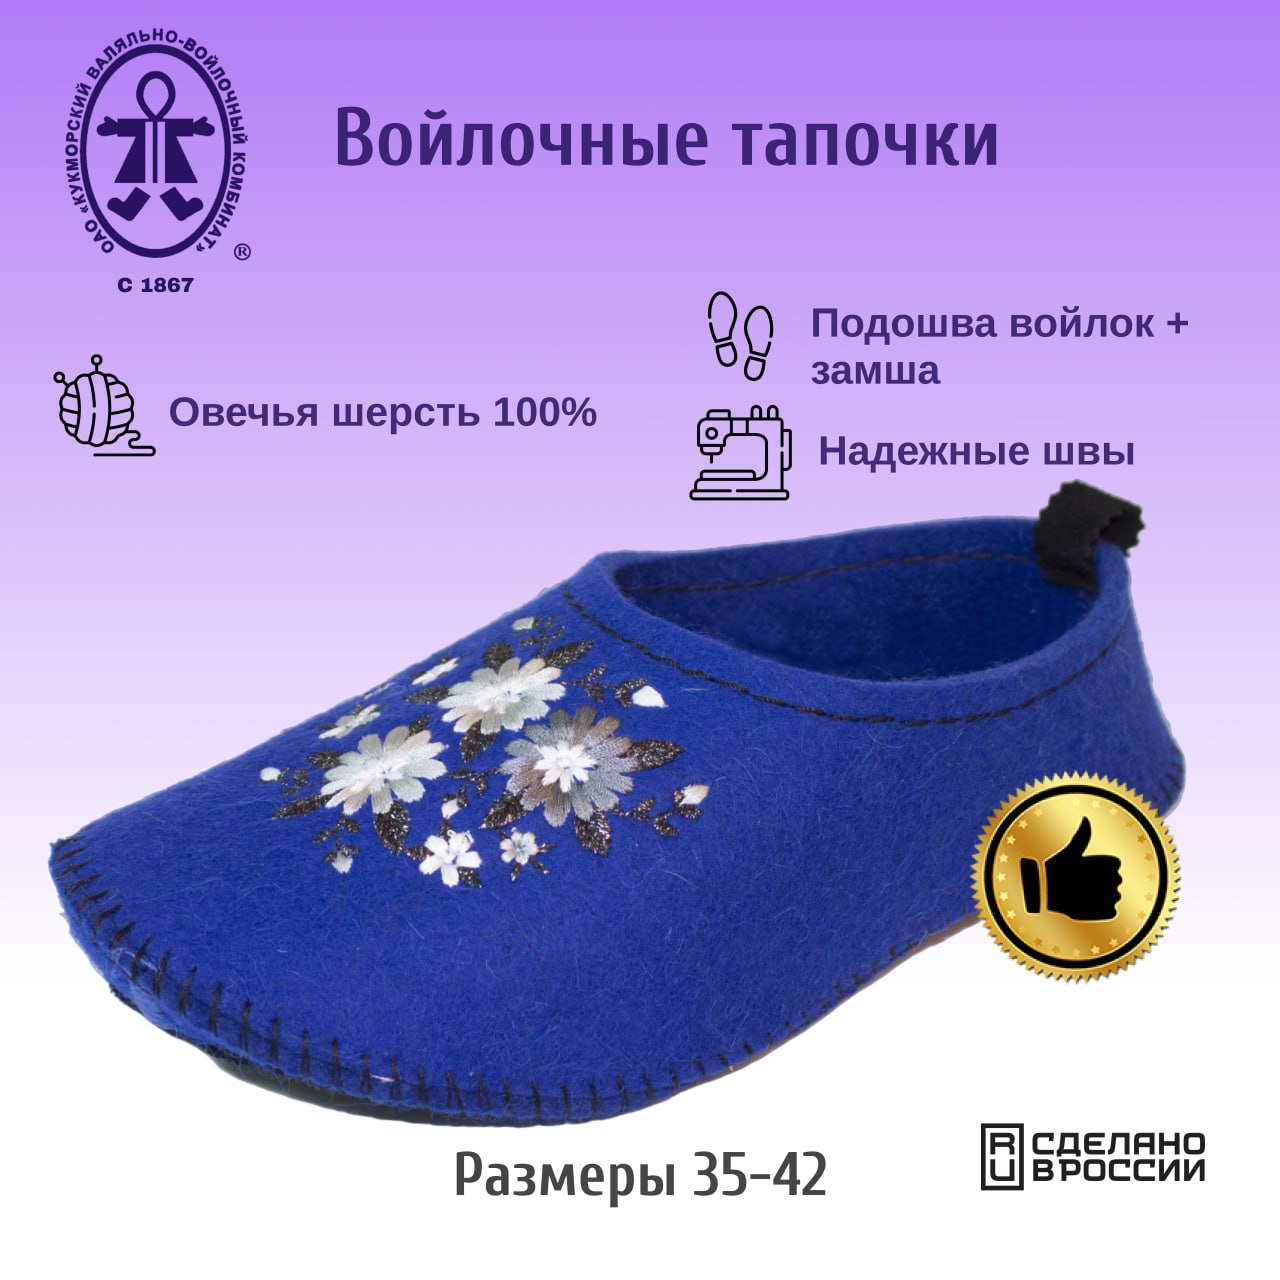 Тапочки женские Кукморские валенки Т-34-2072 синие 37 RU